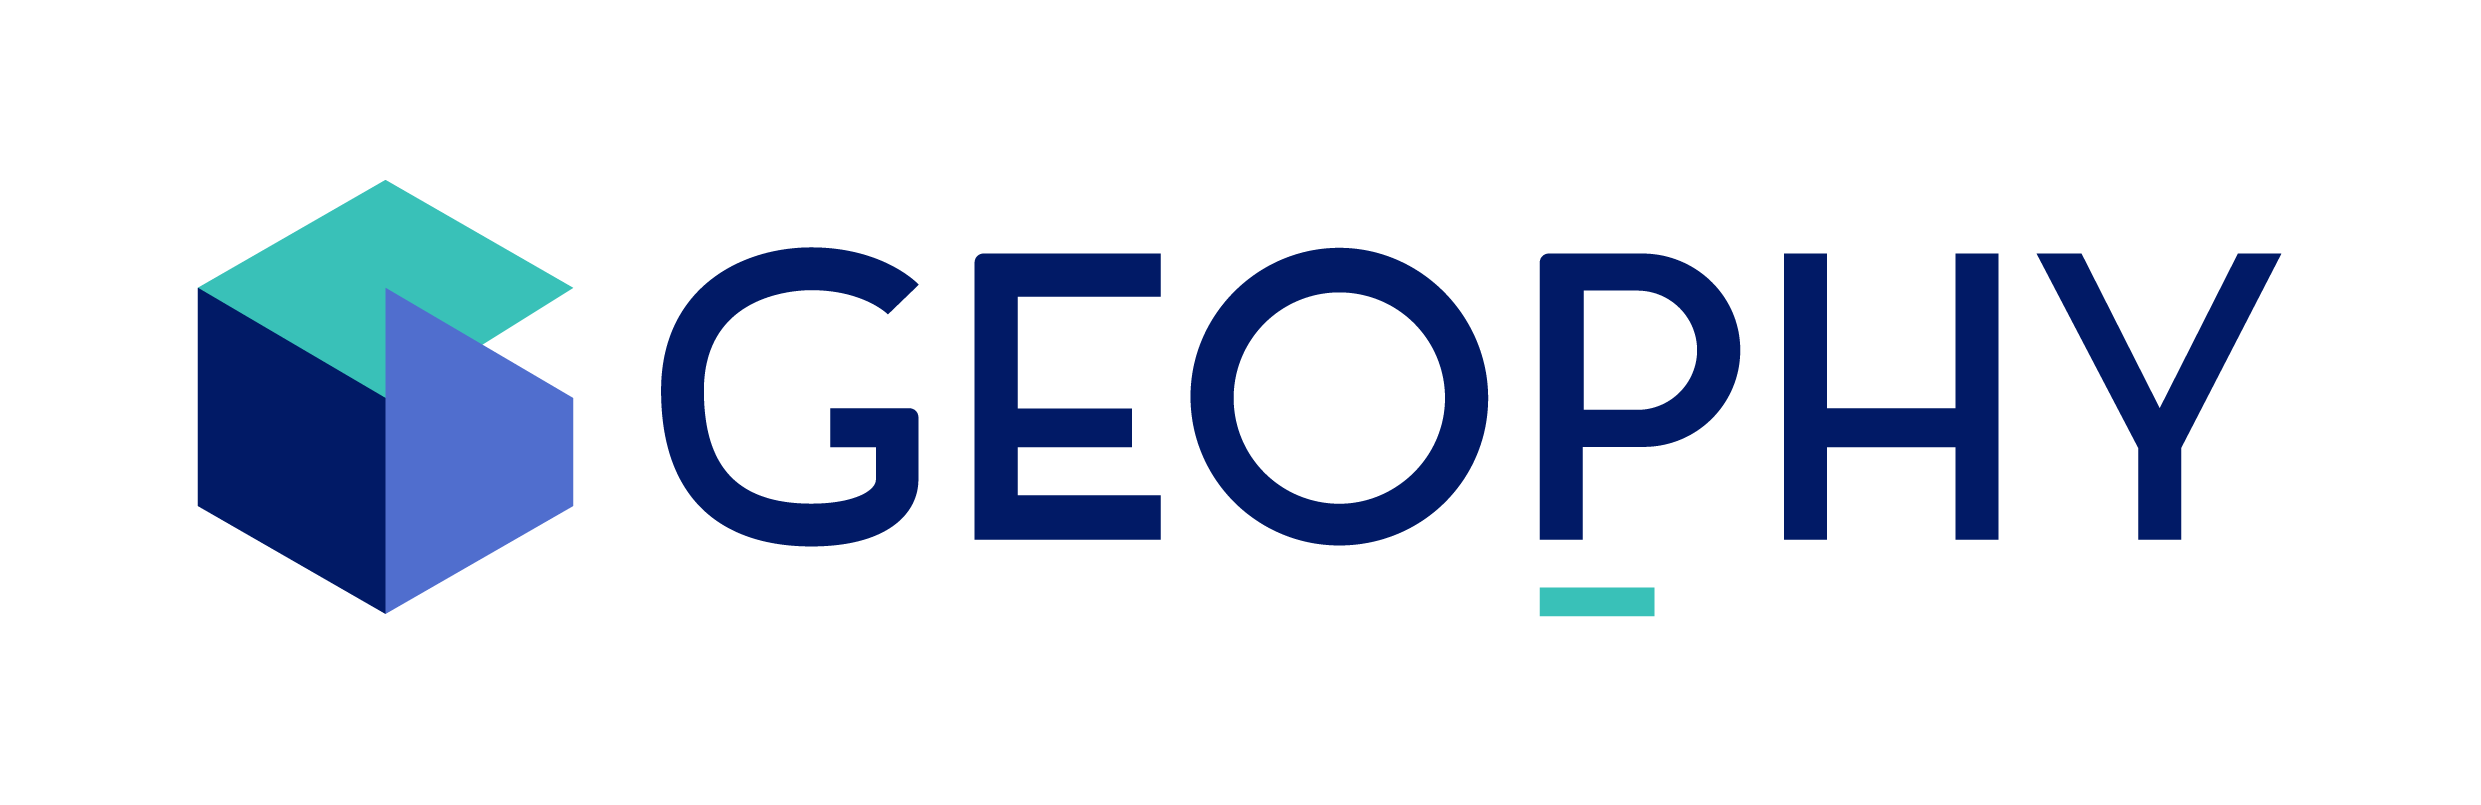 geophy logo.png